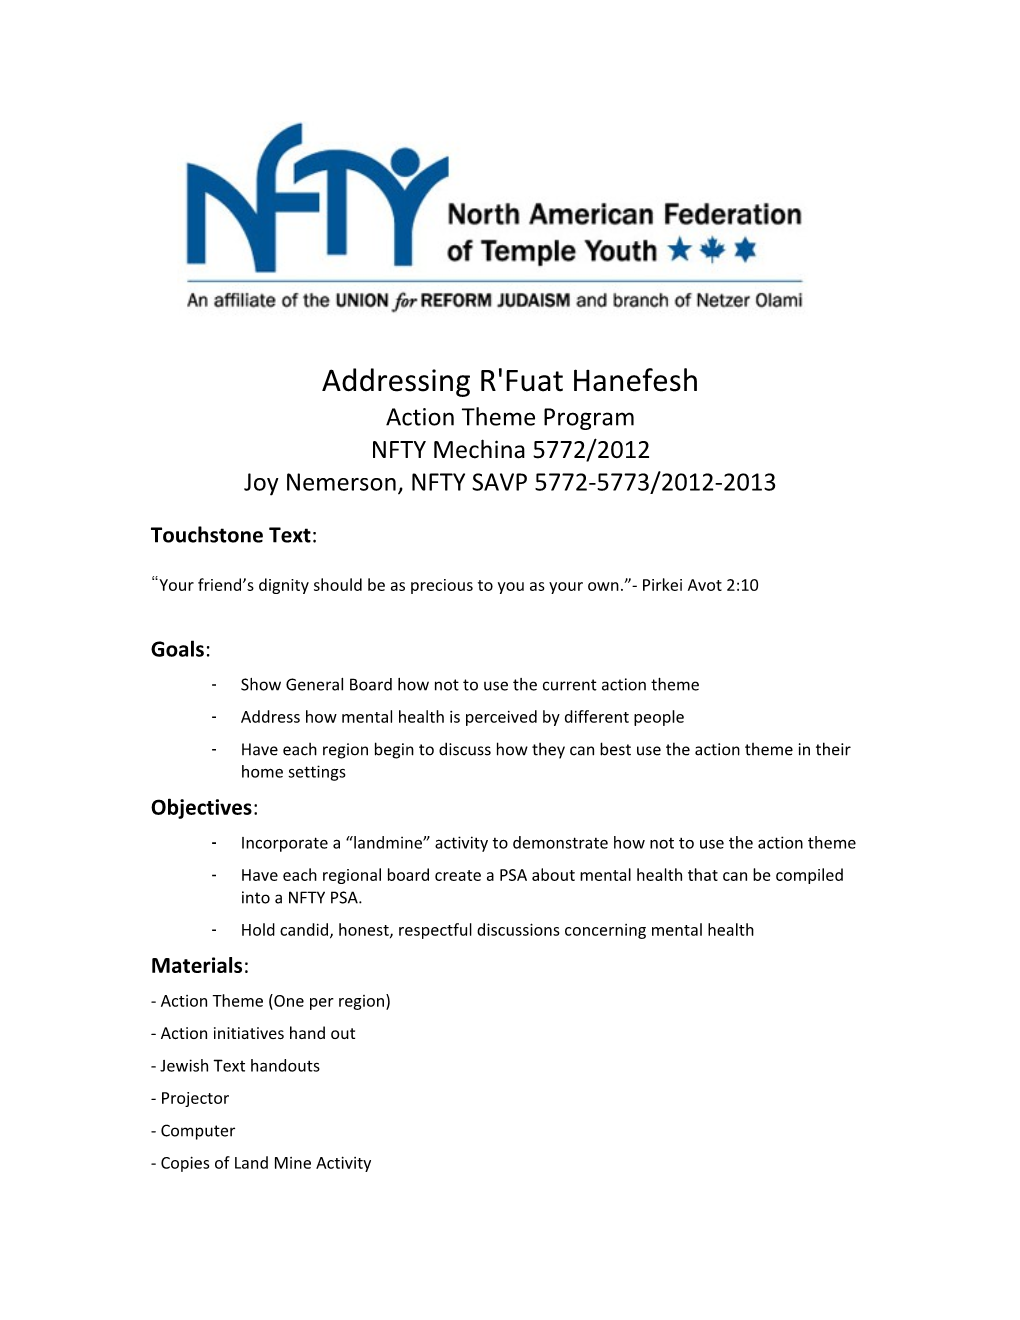 Joy Nemerson, NFTY SAVP 5772-5773/2012-2013